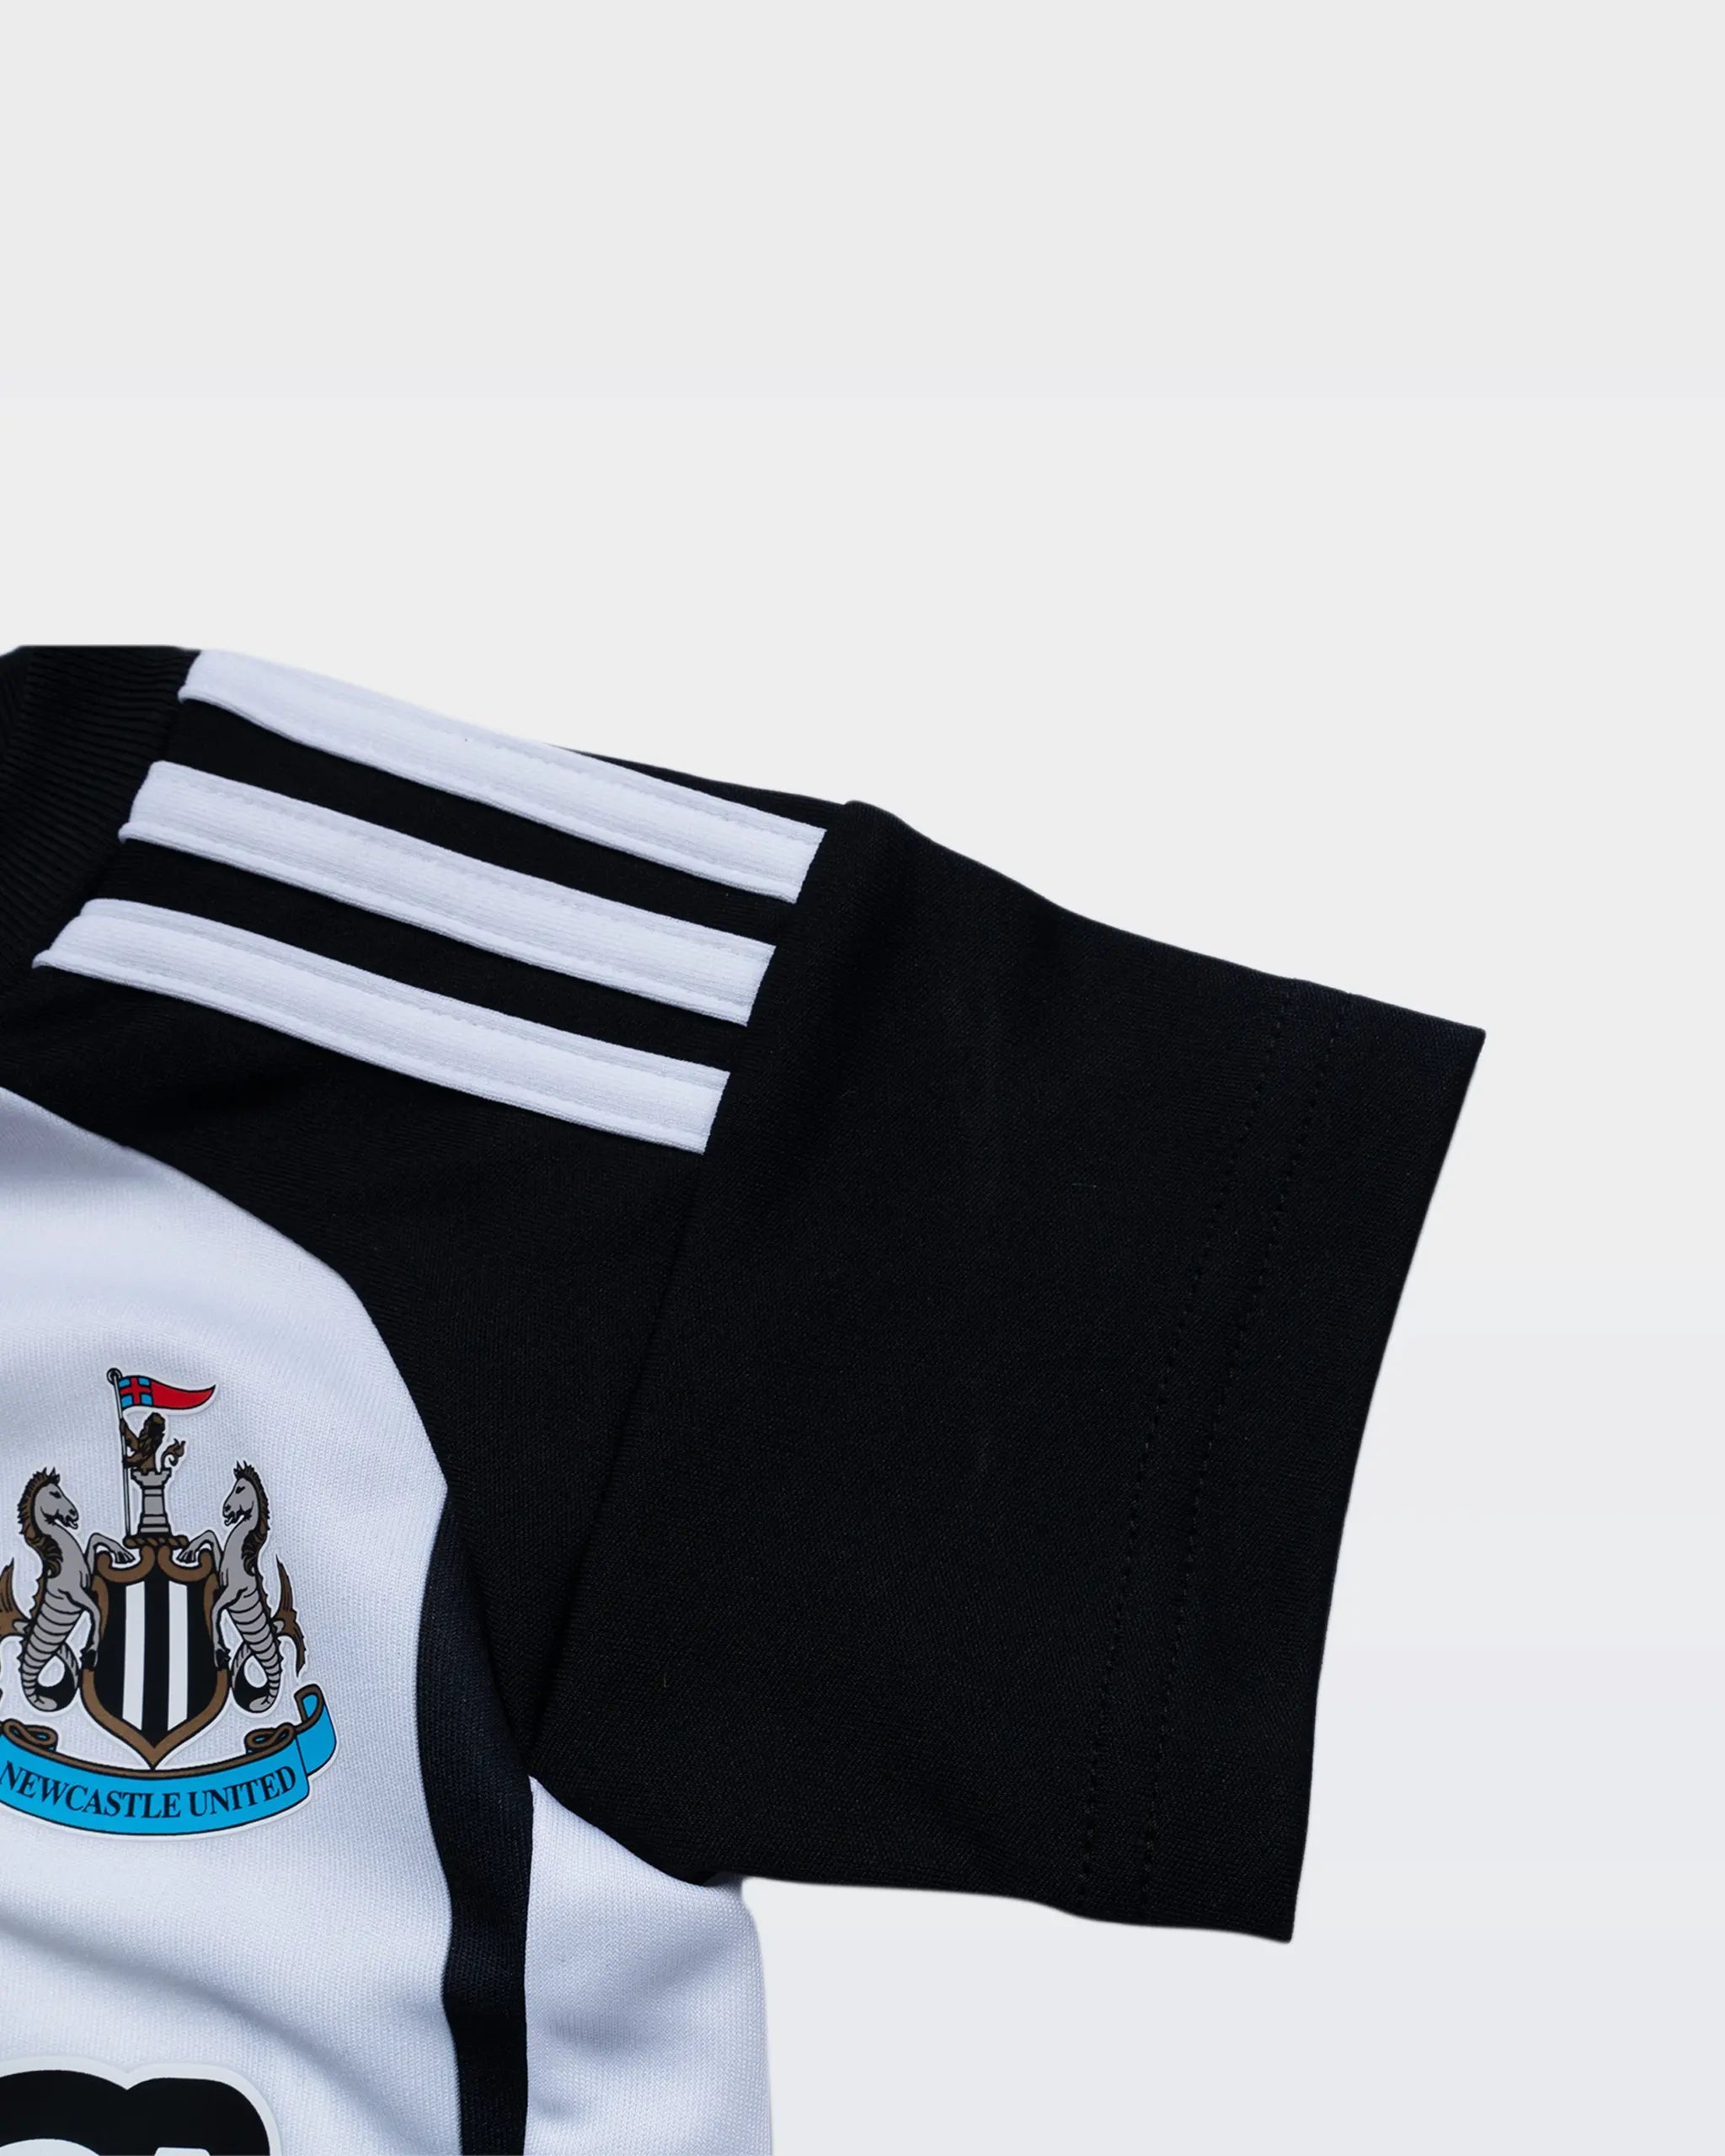 Newcastle United adidas 24/25 Home Baby Kit